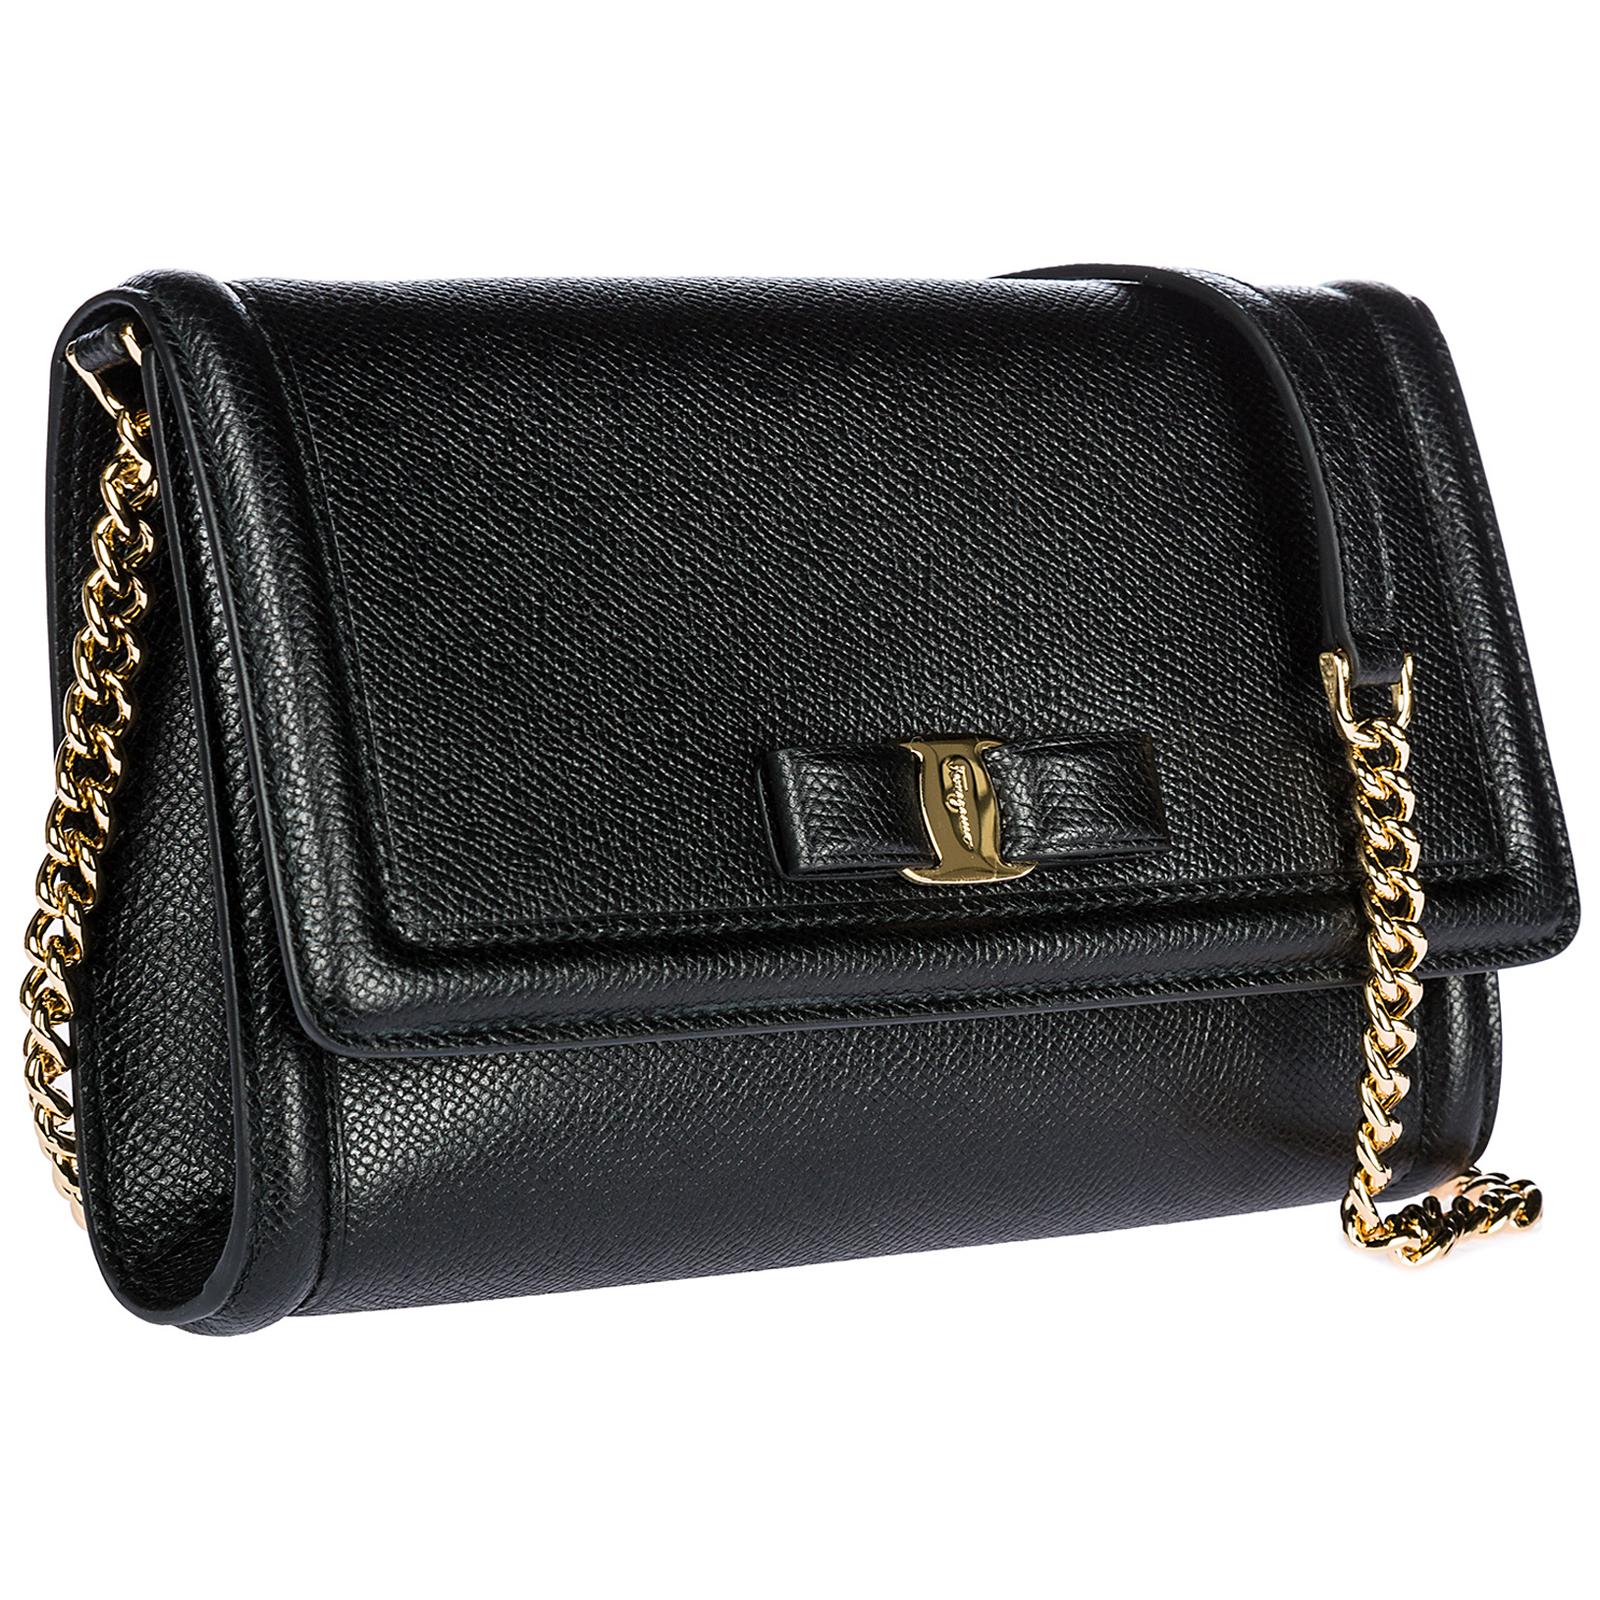 Ferragamo Leather Women&#39;s Clutch With Shoulder Strap Handbag Bag Purse Vara in Nero (Black) - Lyst